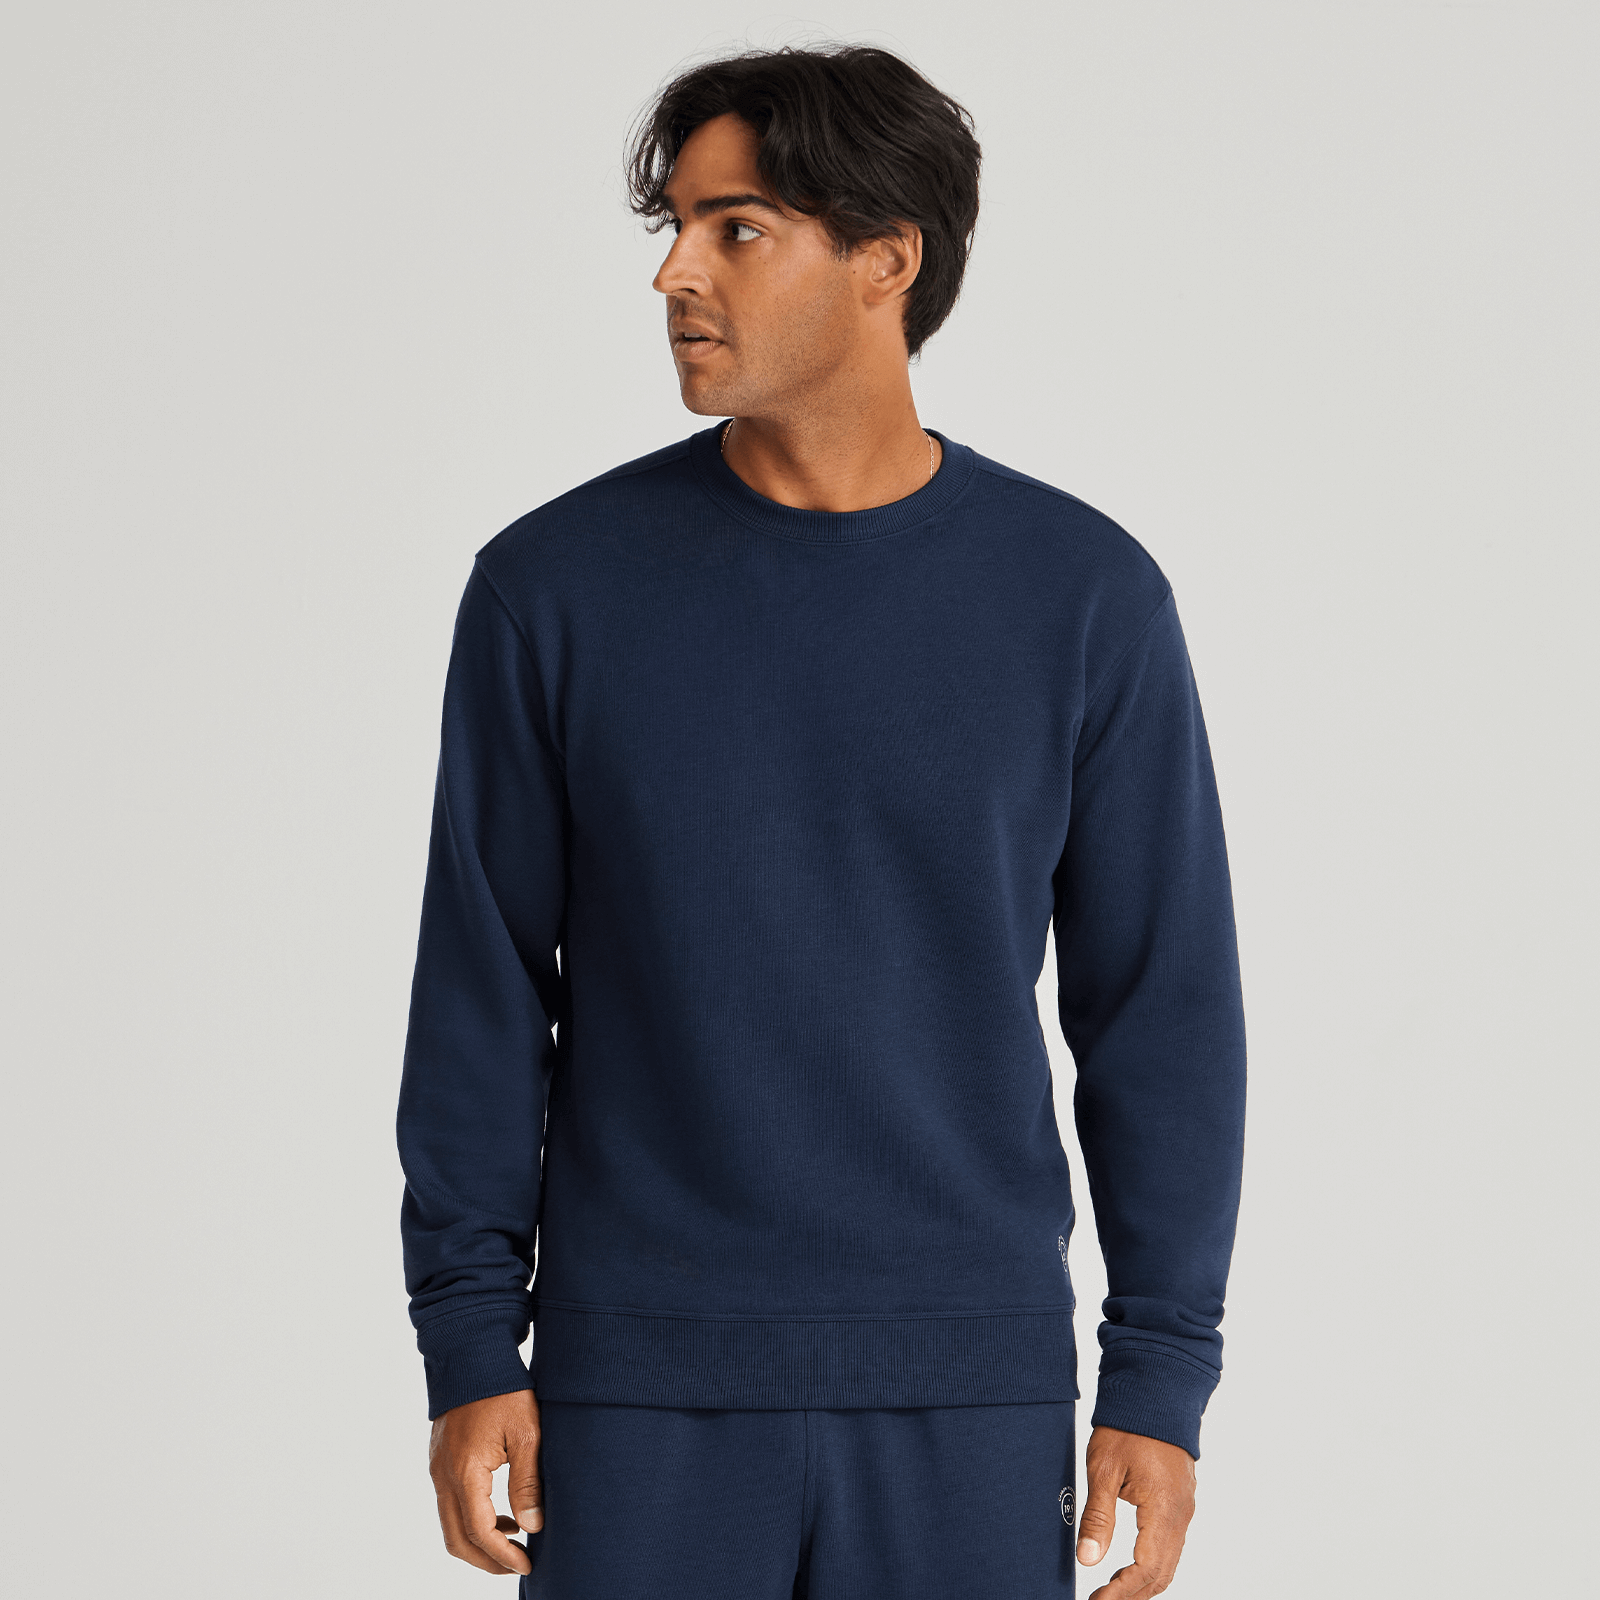 Men's Sweatshirts & Sweatpants - Allbirds Canada